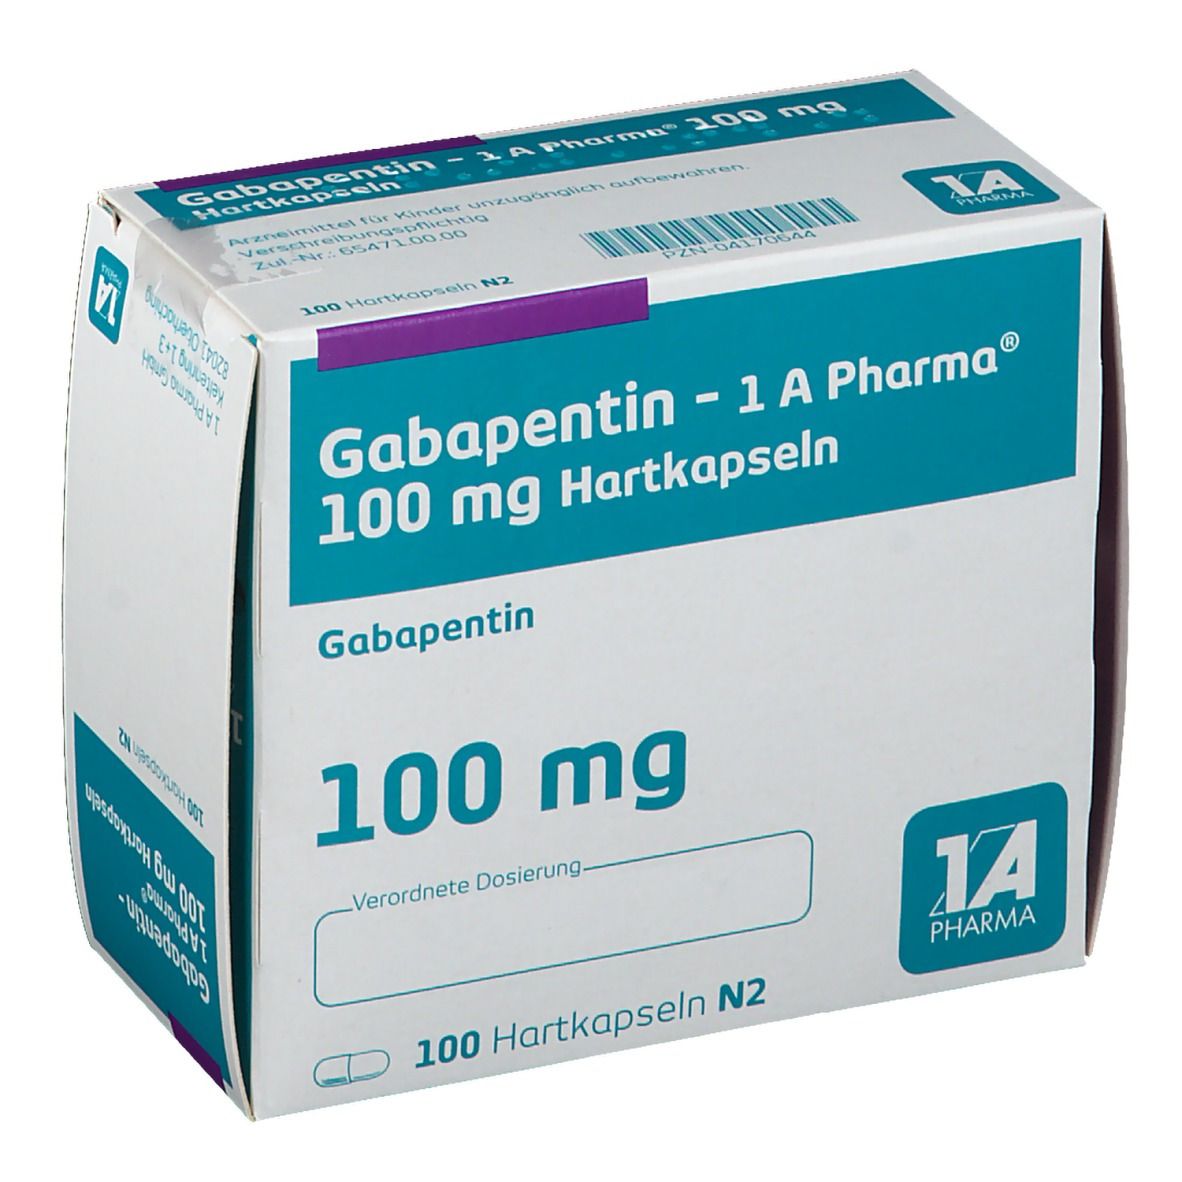 Габапентин производители какой лучше. Габапентин 100 мг. Капсулы габапентин 100 мг. Габапентин 600 мг. Габапентин канон 600мг.